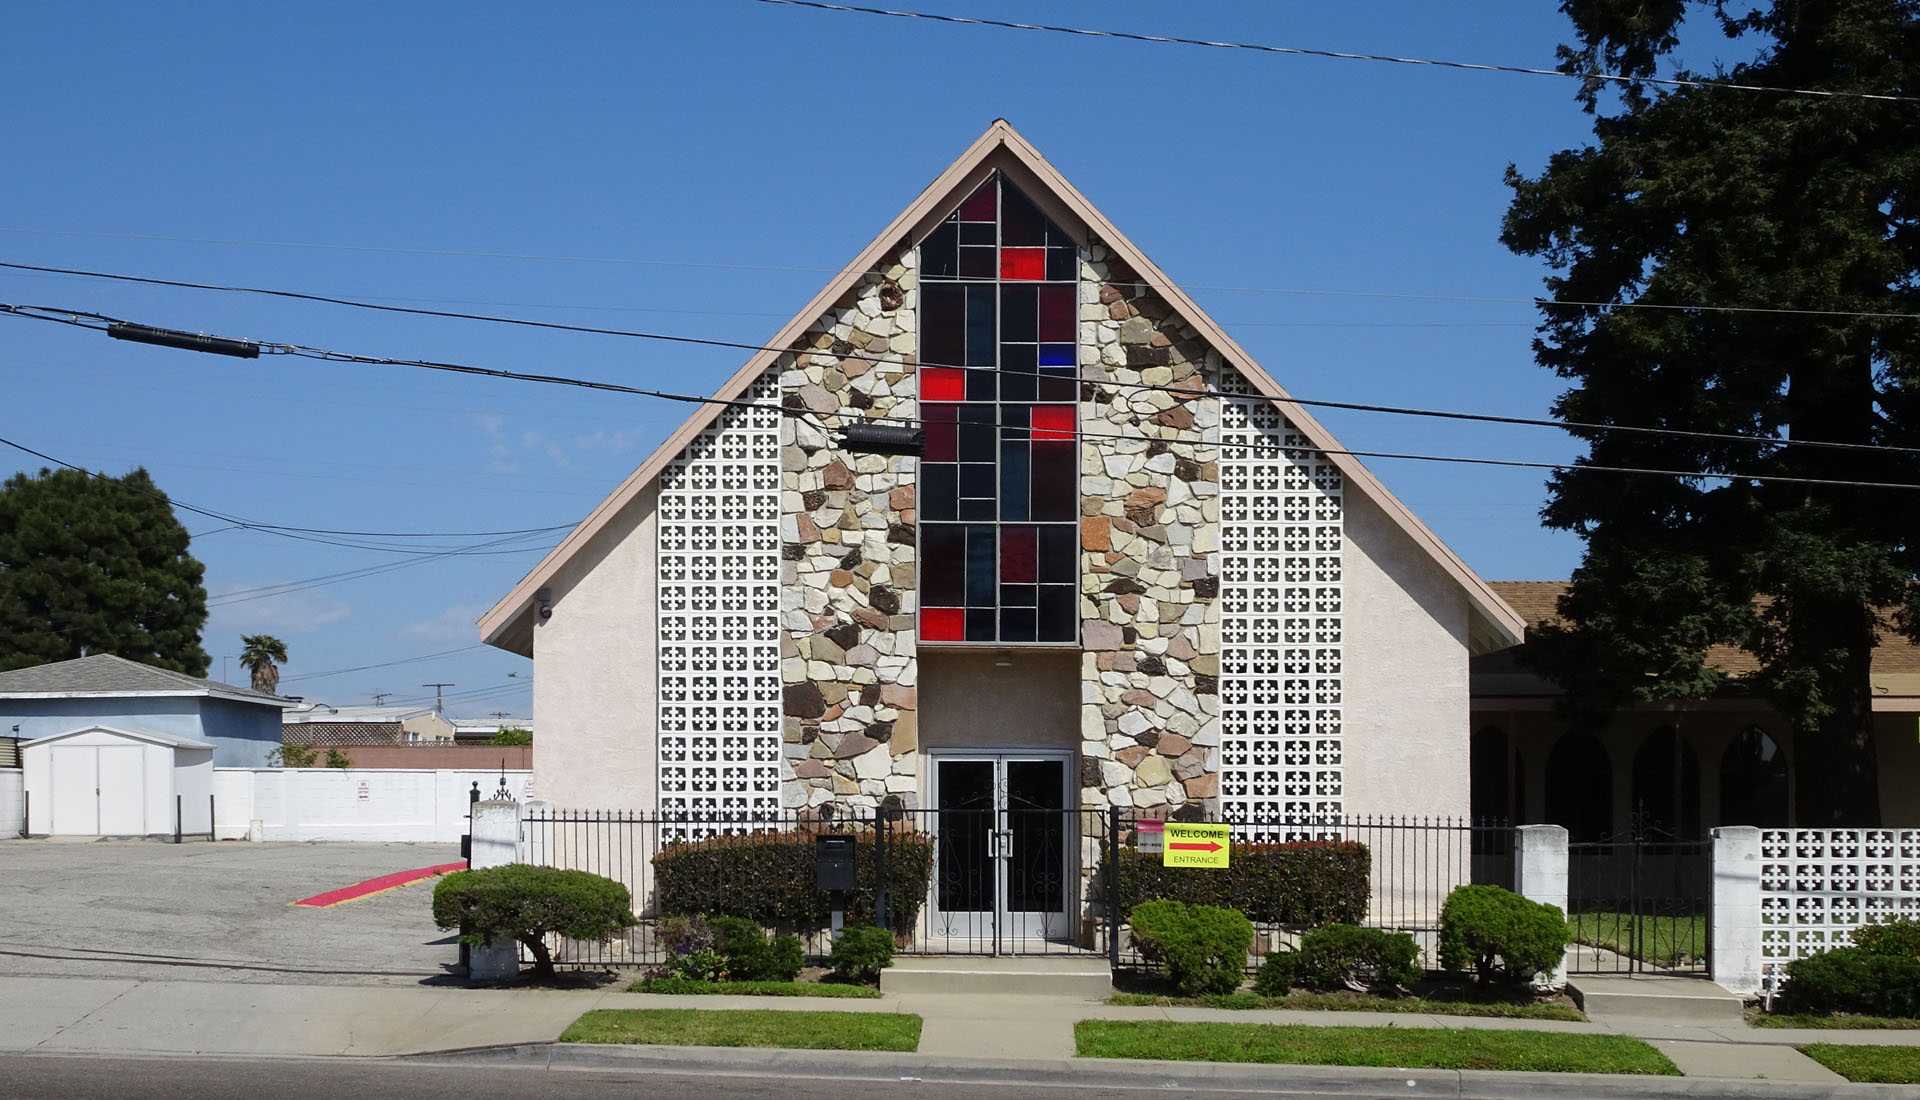 Normandie Avenue Seventh Day Adventist Church